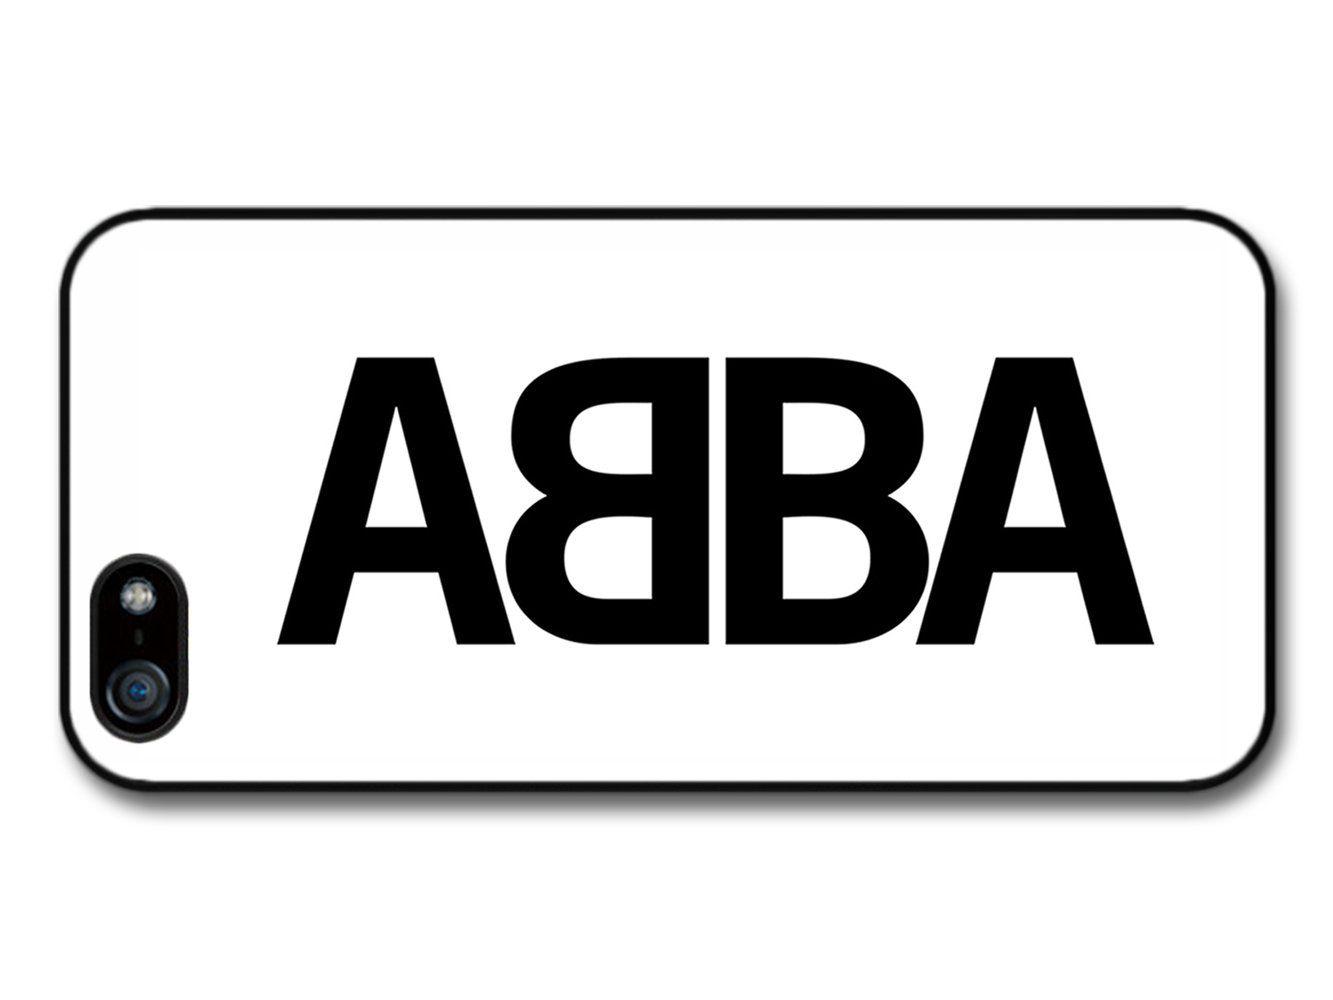 Abba Logo - Amazon.com: Abba Logo Black and White case for iPhone 5 5S: Cell ...